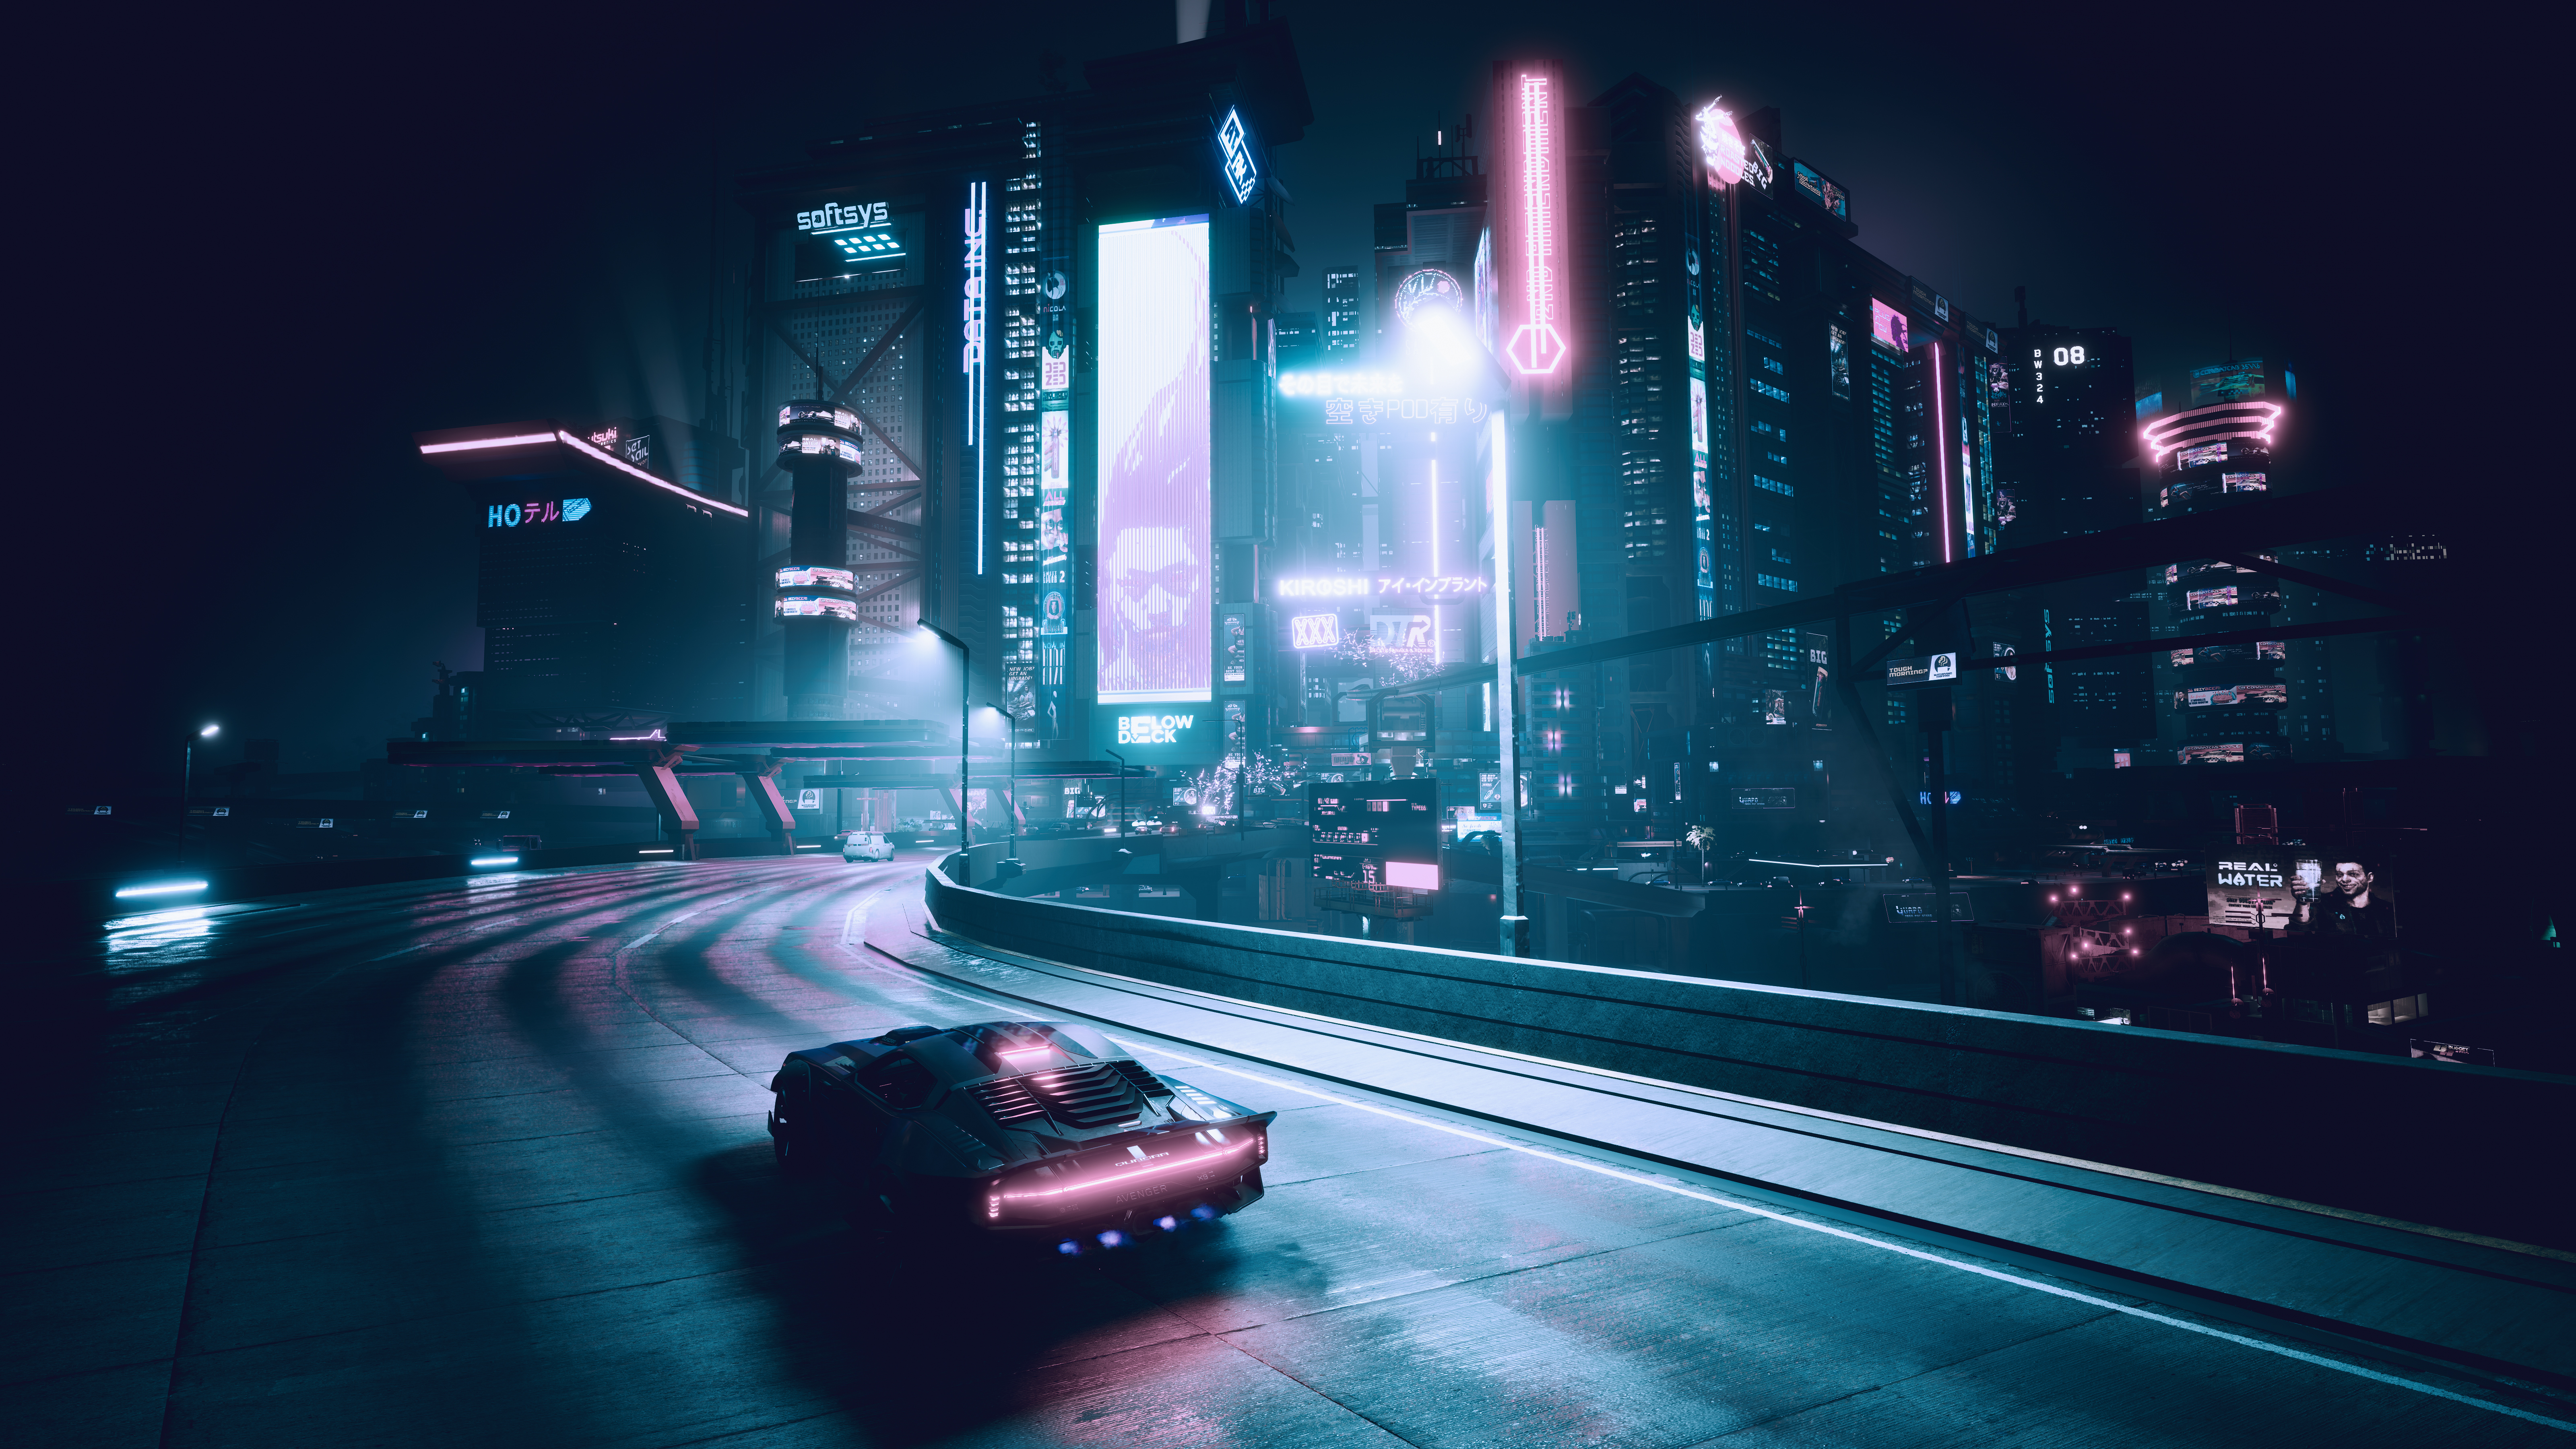 General 6400x3600 car racing Cyberpunk 2077 car taillights city city lights night neon CD Projekt RED digital art video games